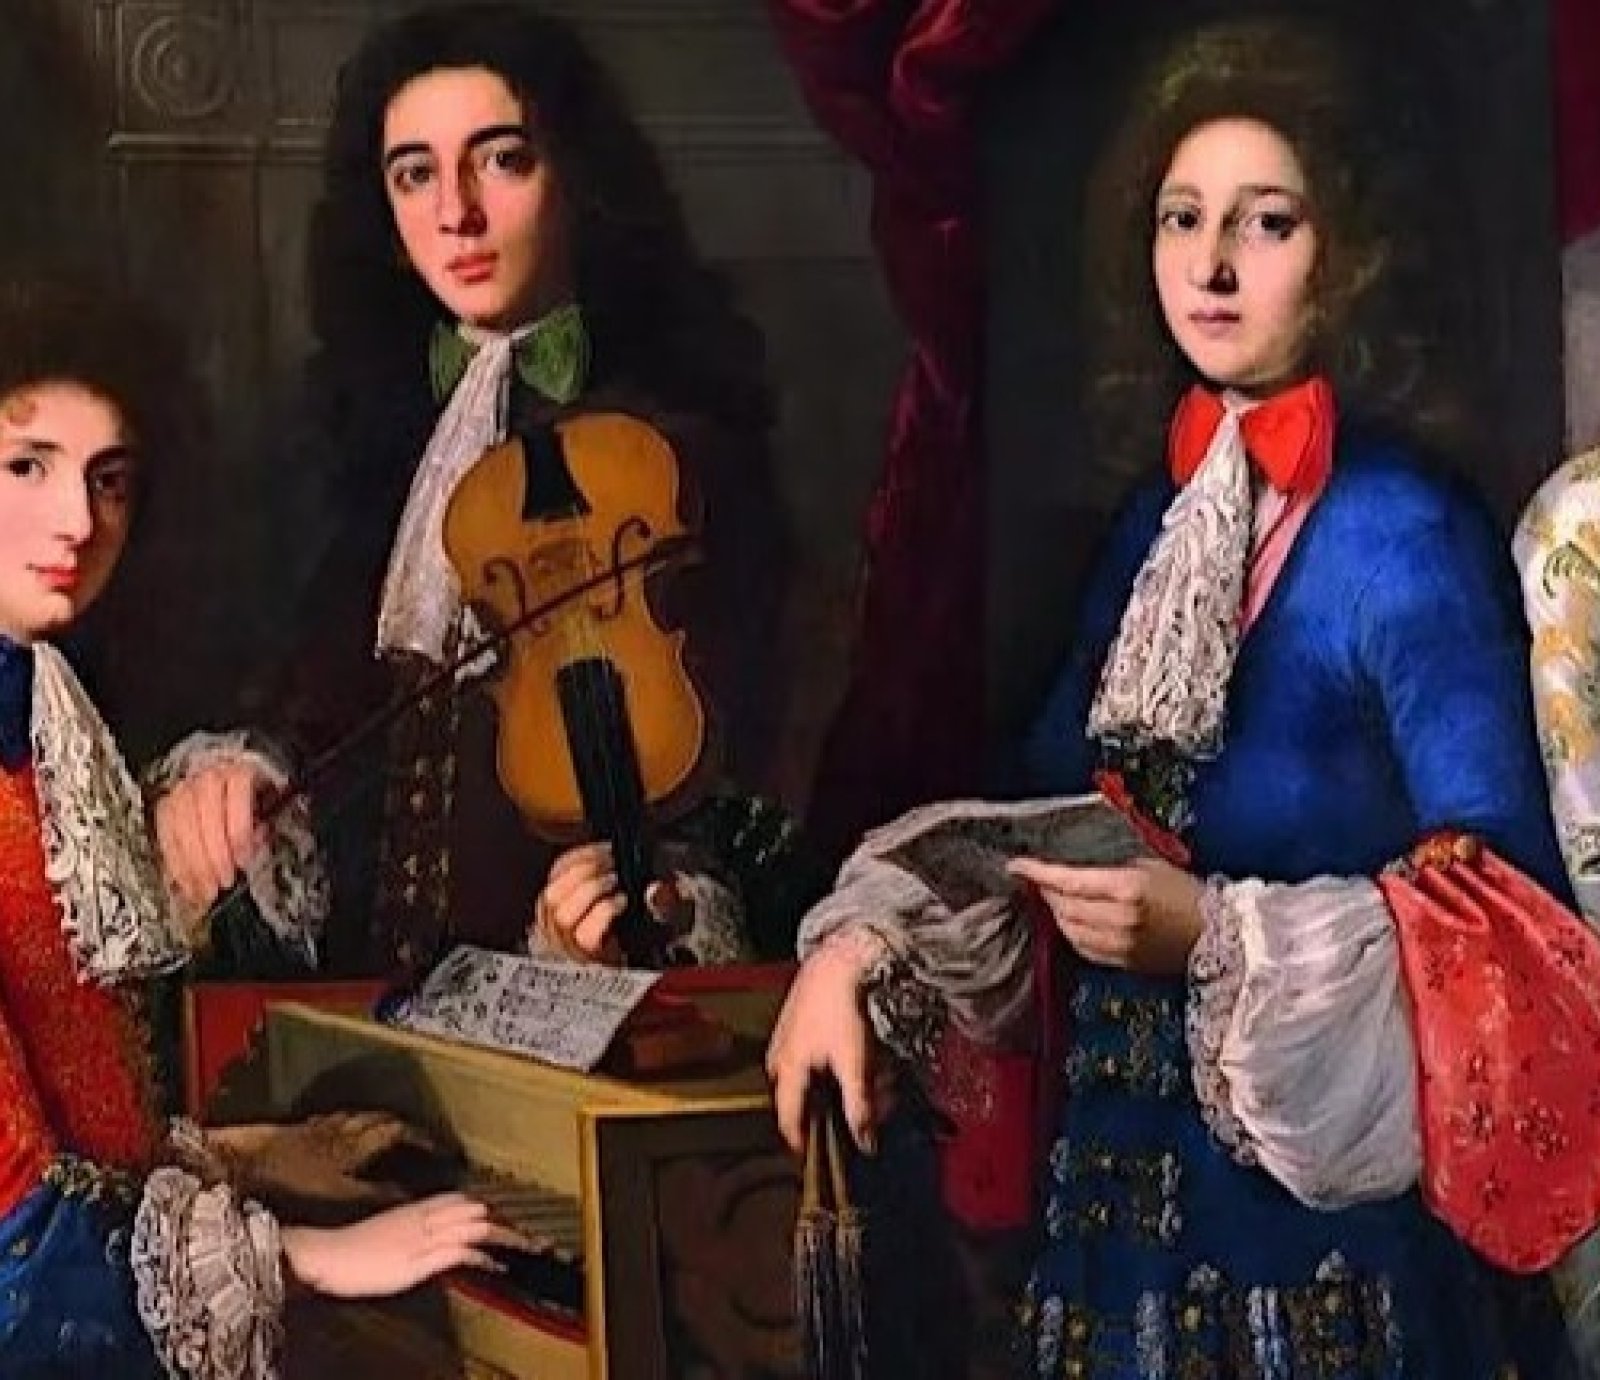 Camenae de Cymru: The Best of Antonio Vivaldi